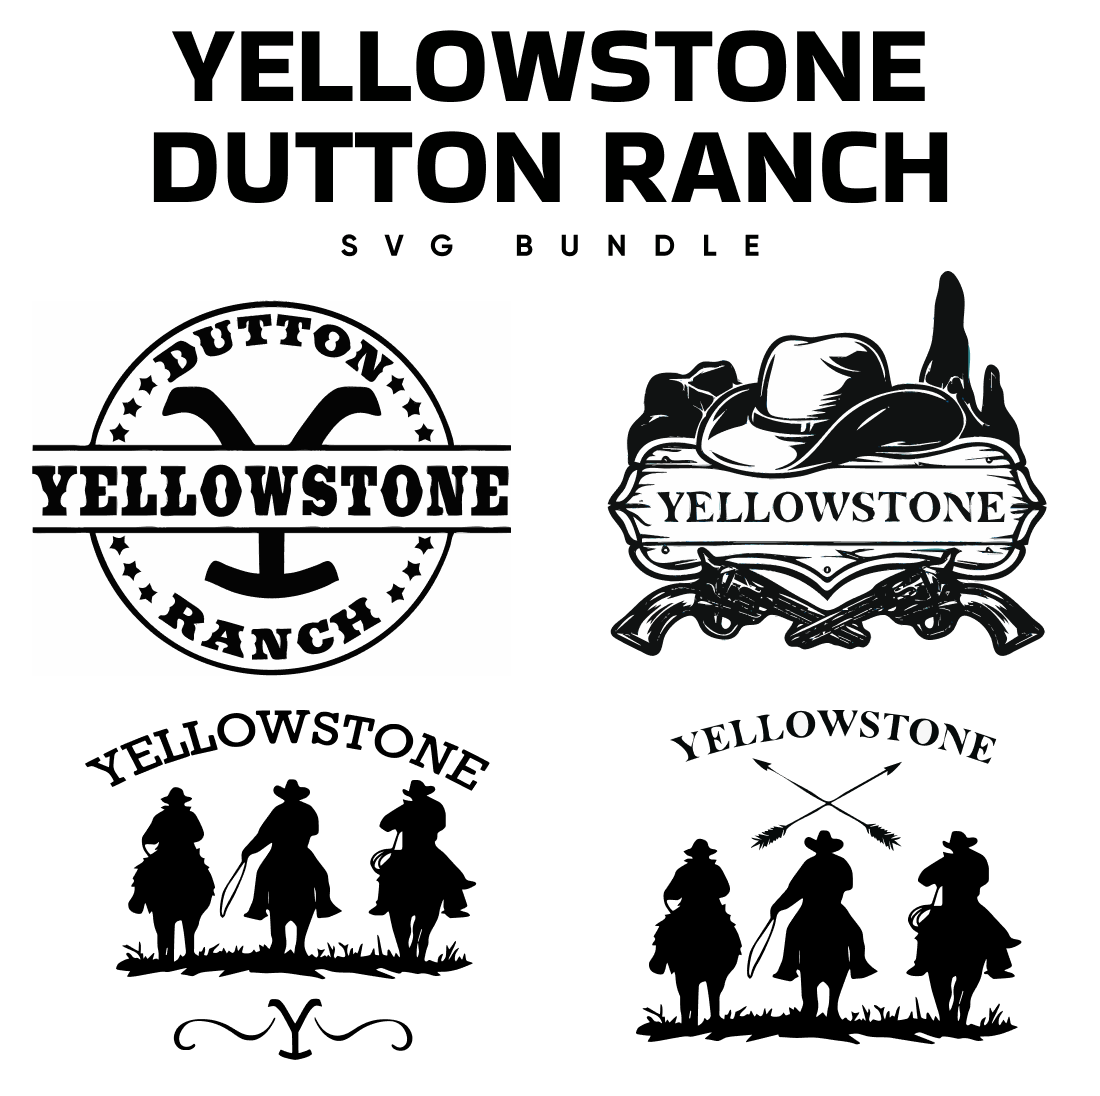 Yellowstone Dutton Ranch SVG Free.